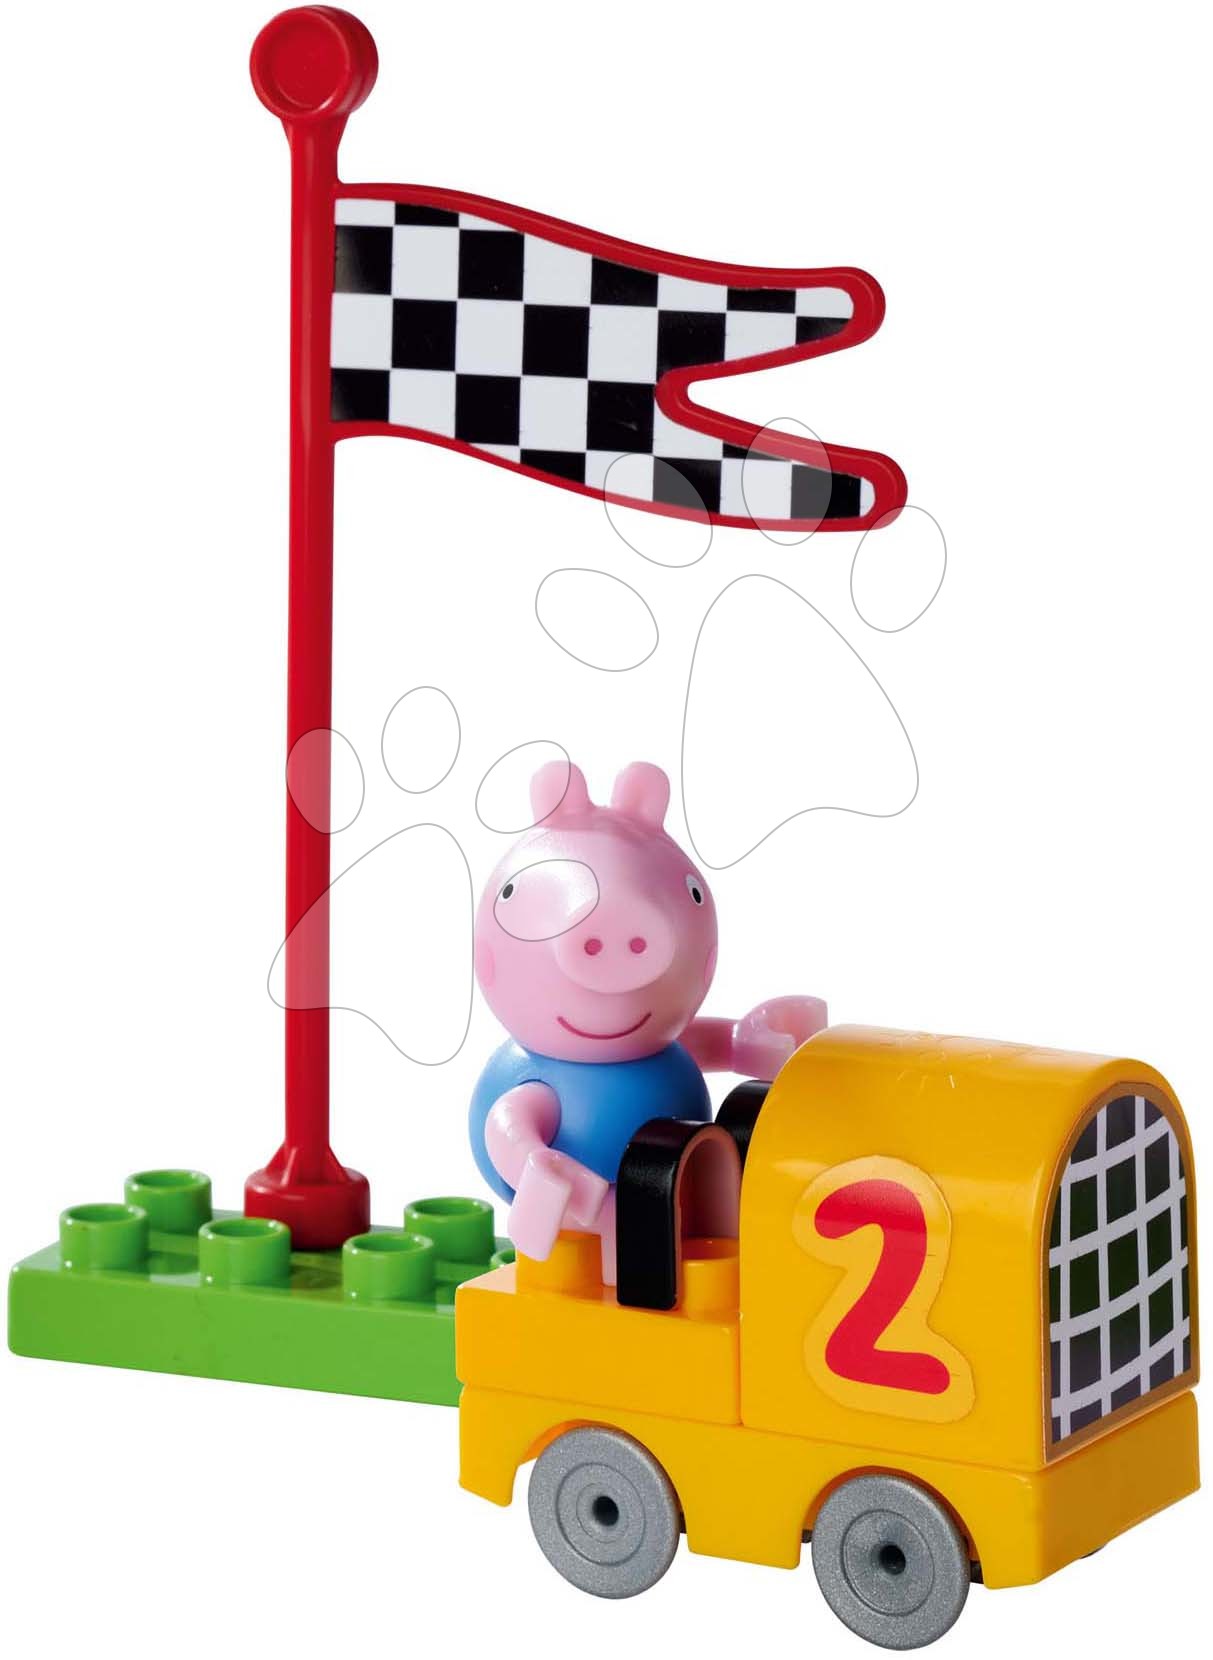 Stavebnice BIG-Bloxx jako lego - Stavebnice Peppa Pig Starter Set PlayBig Bloxx BIG s figurkou – s autíčkem od 1,5-5 let